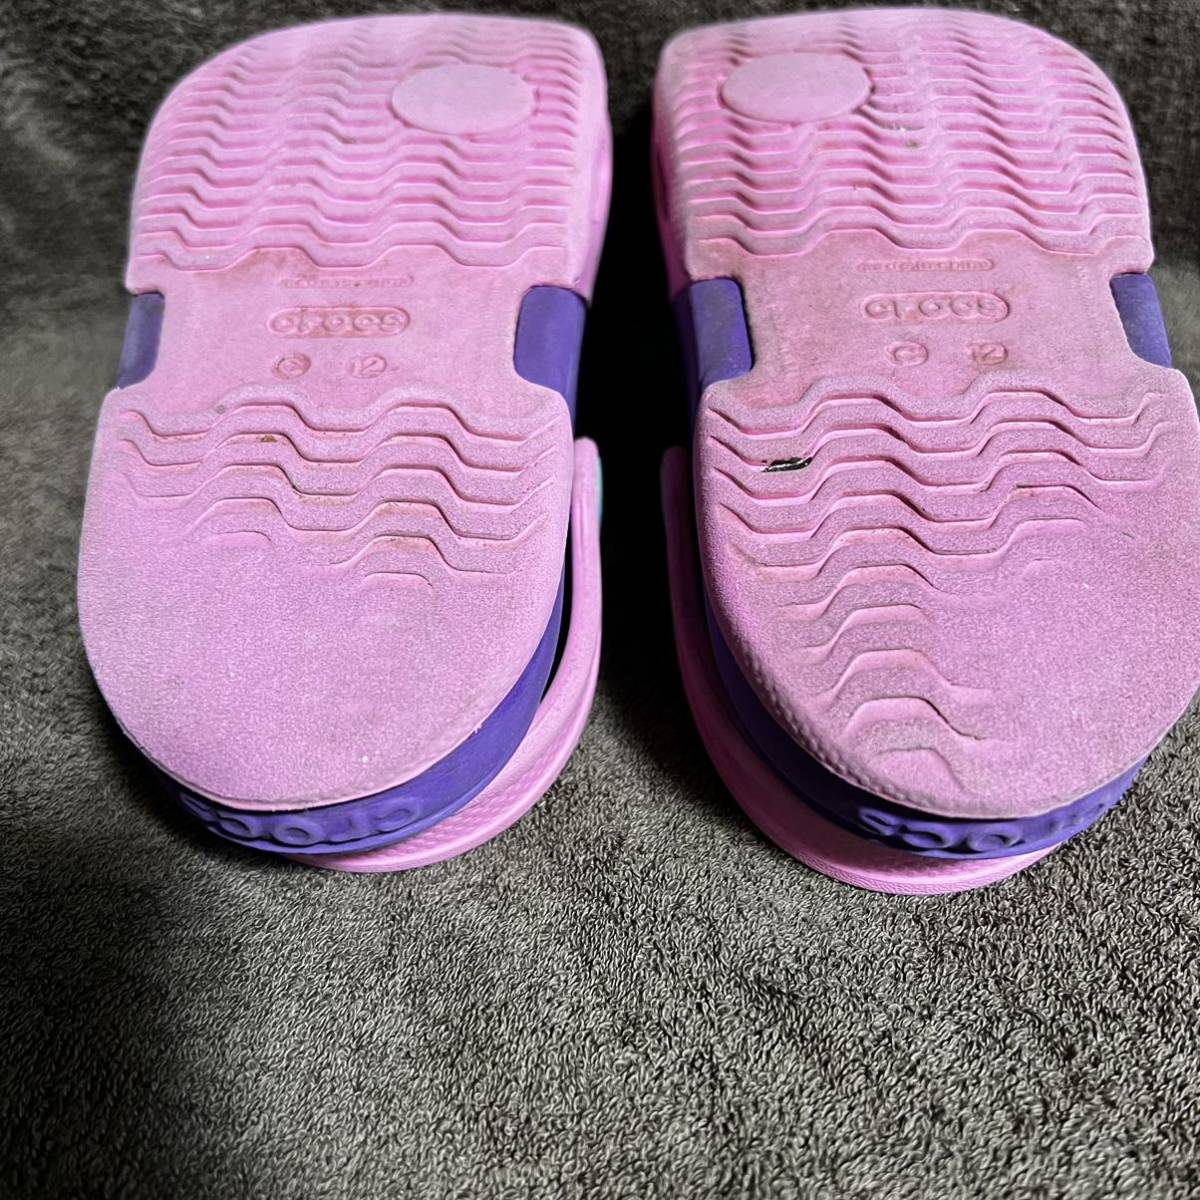  Crocs sandals C12 18.5cm crocs Crocs Kids pink purple 